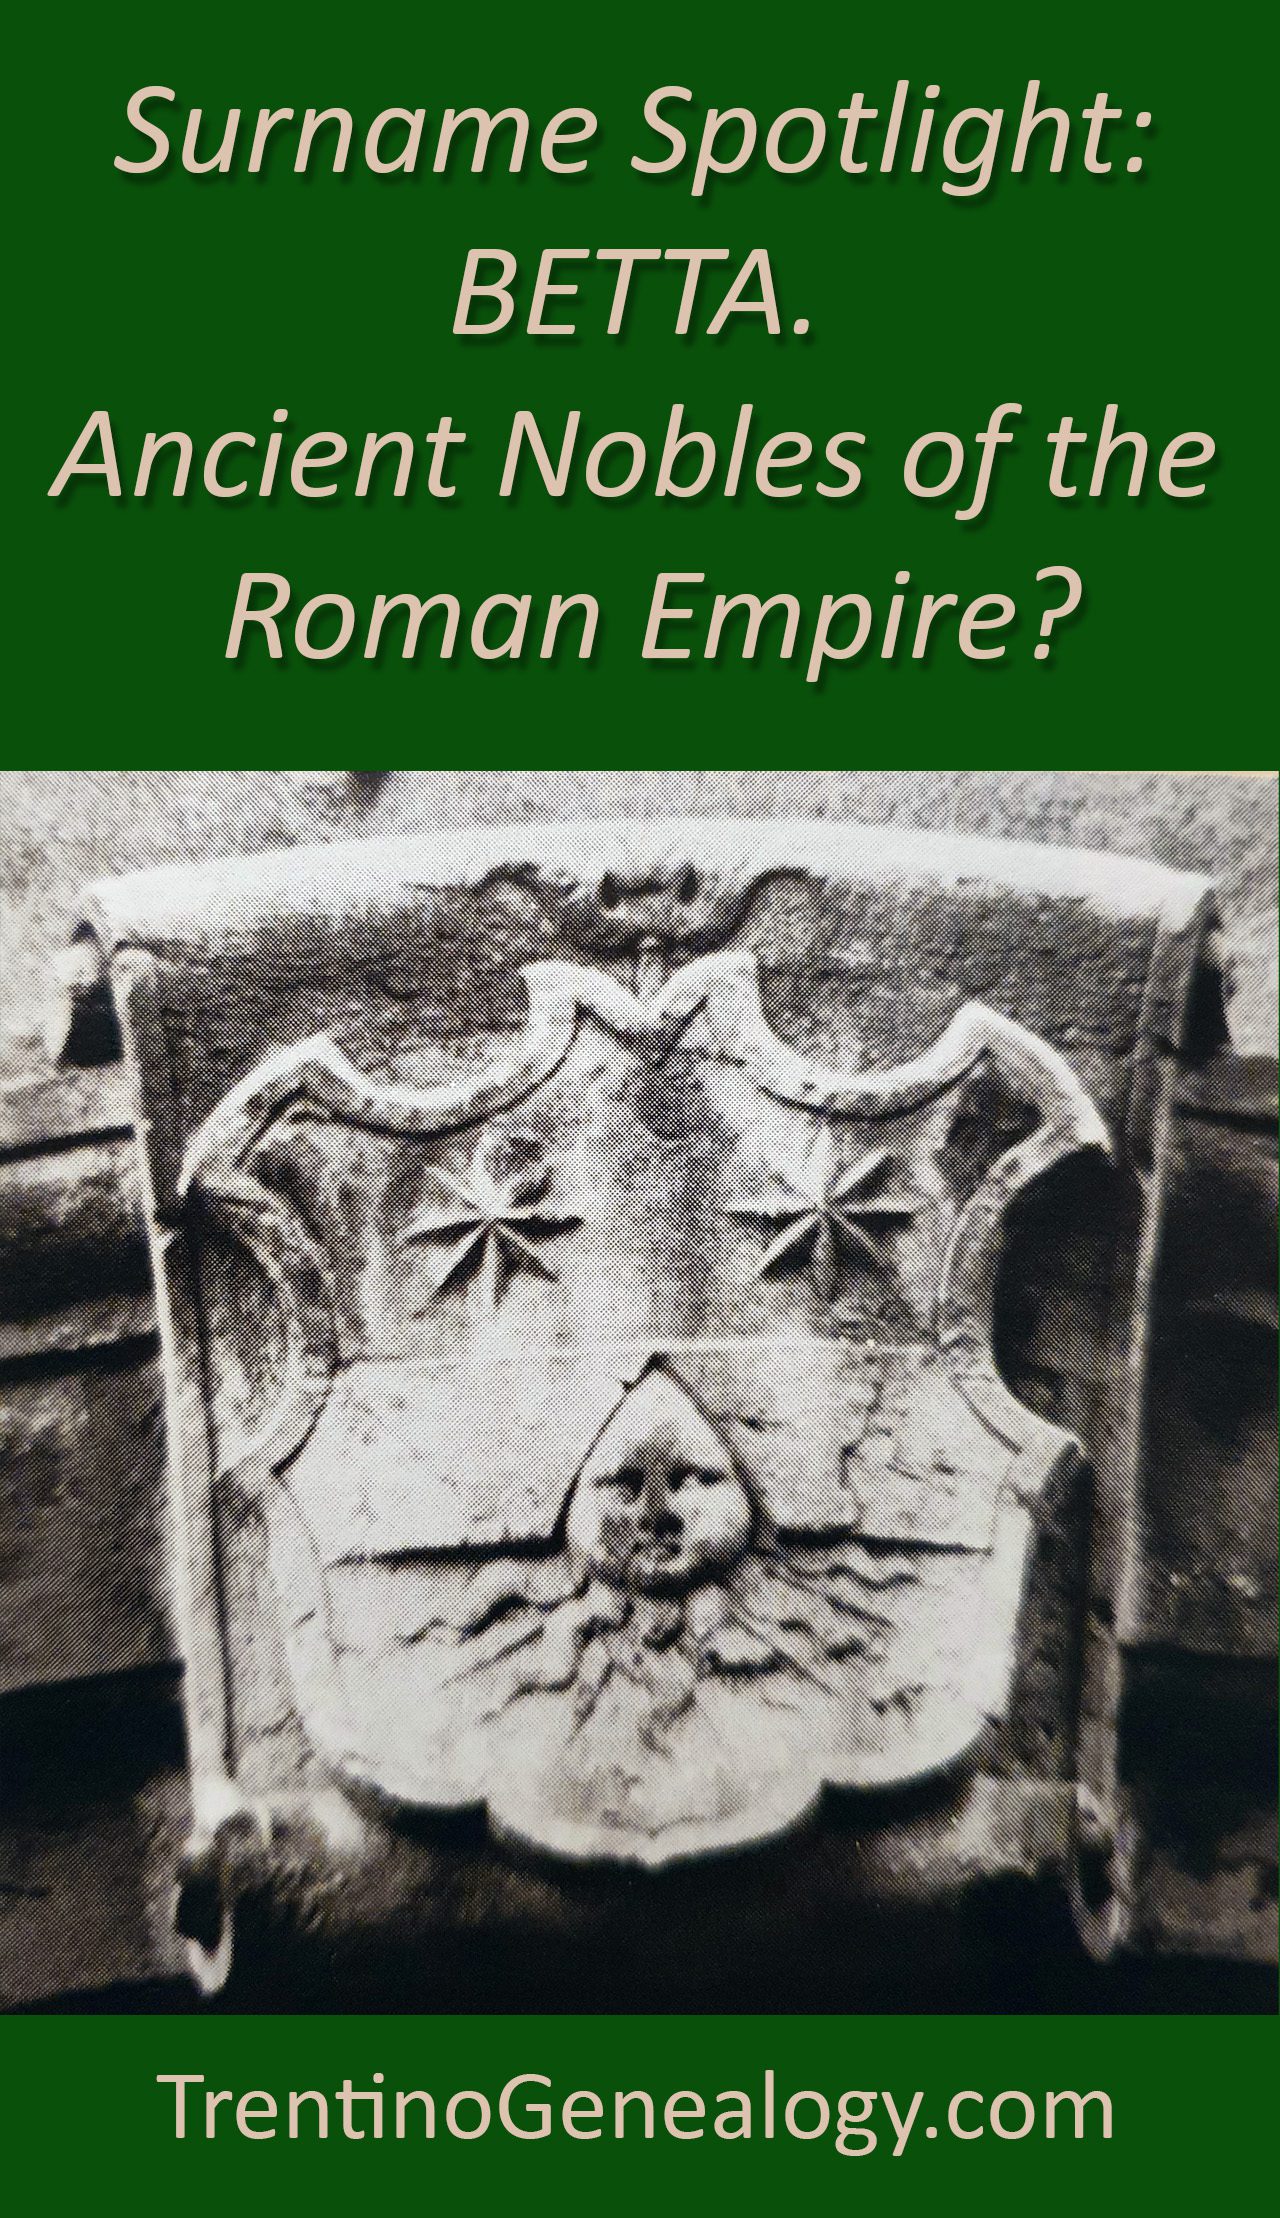 ARTICLE: Betta. Ancient Nobles of the Roman Empire?